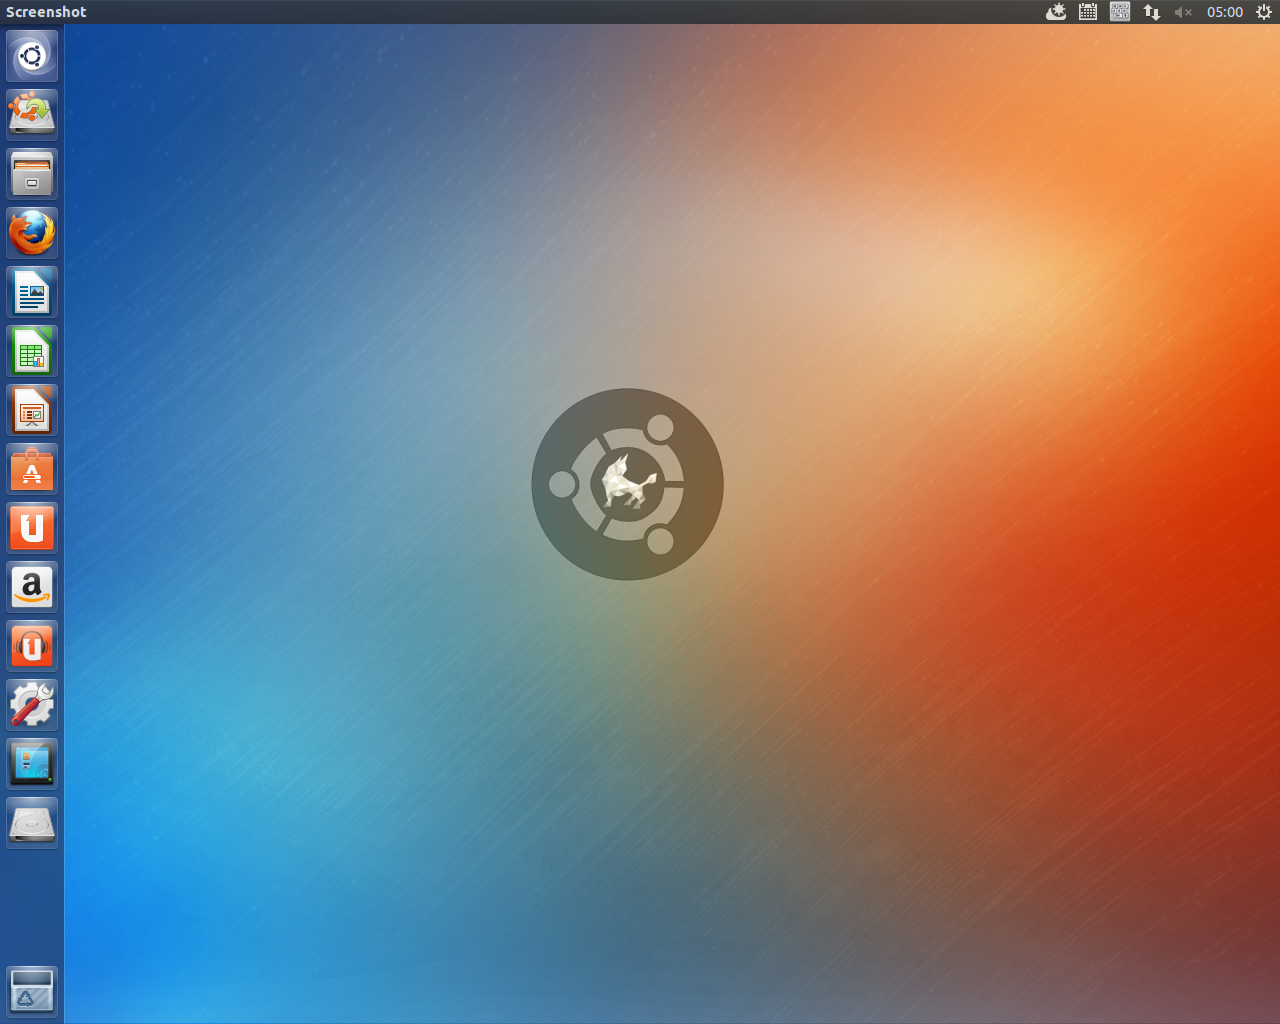 Xubuntu Download 16.04 For Mac